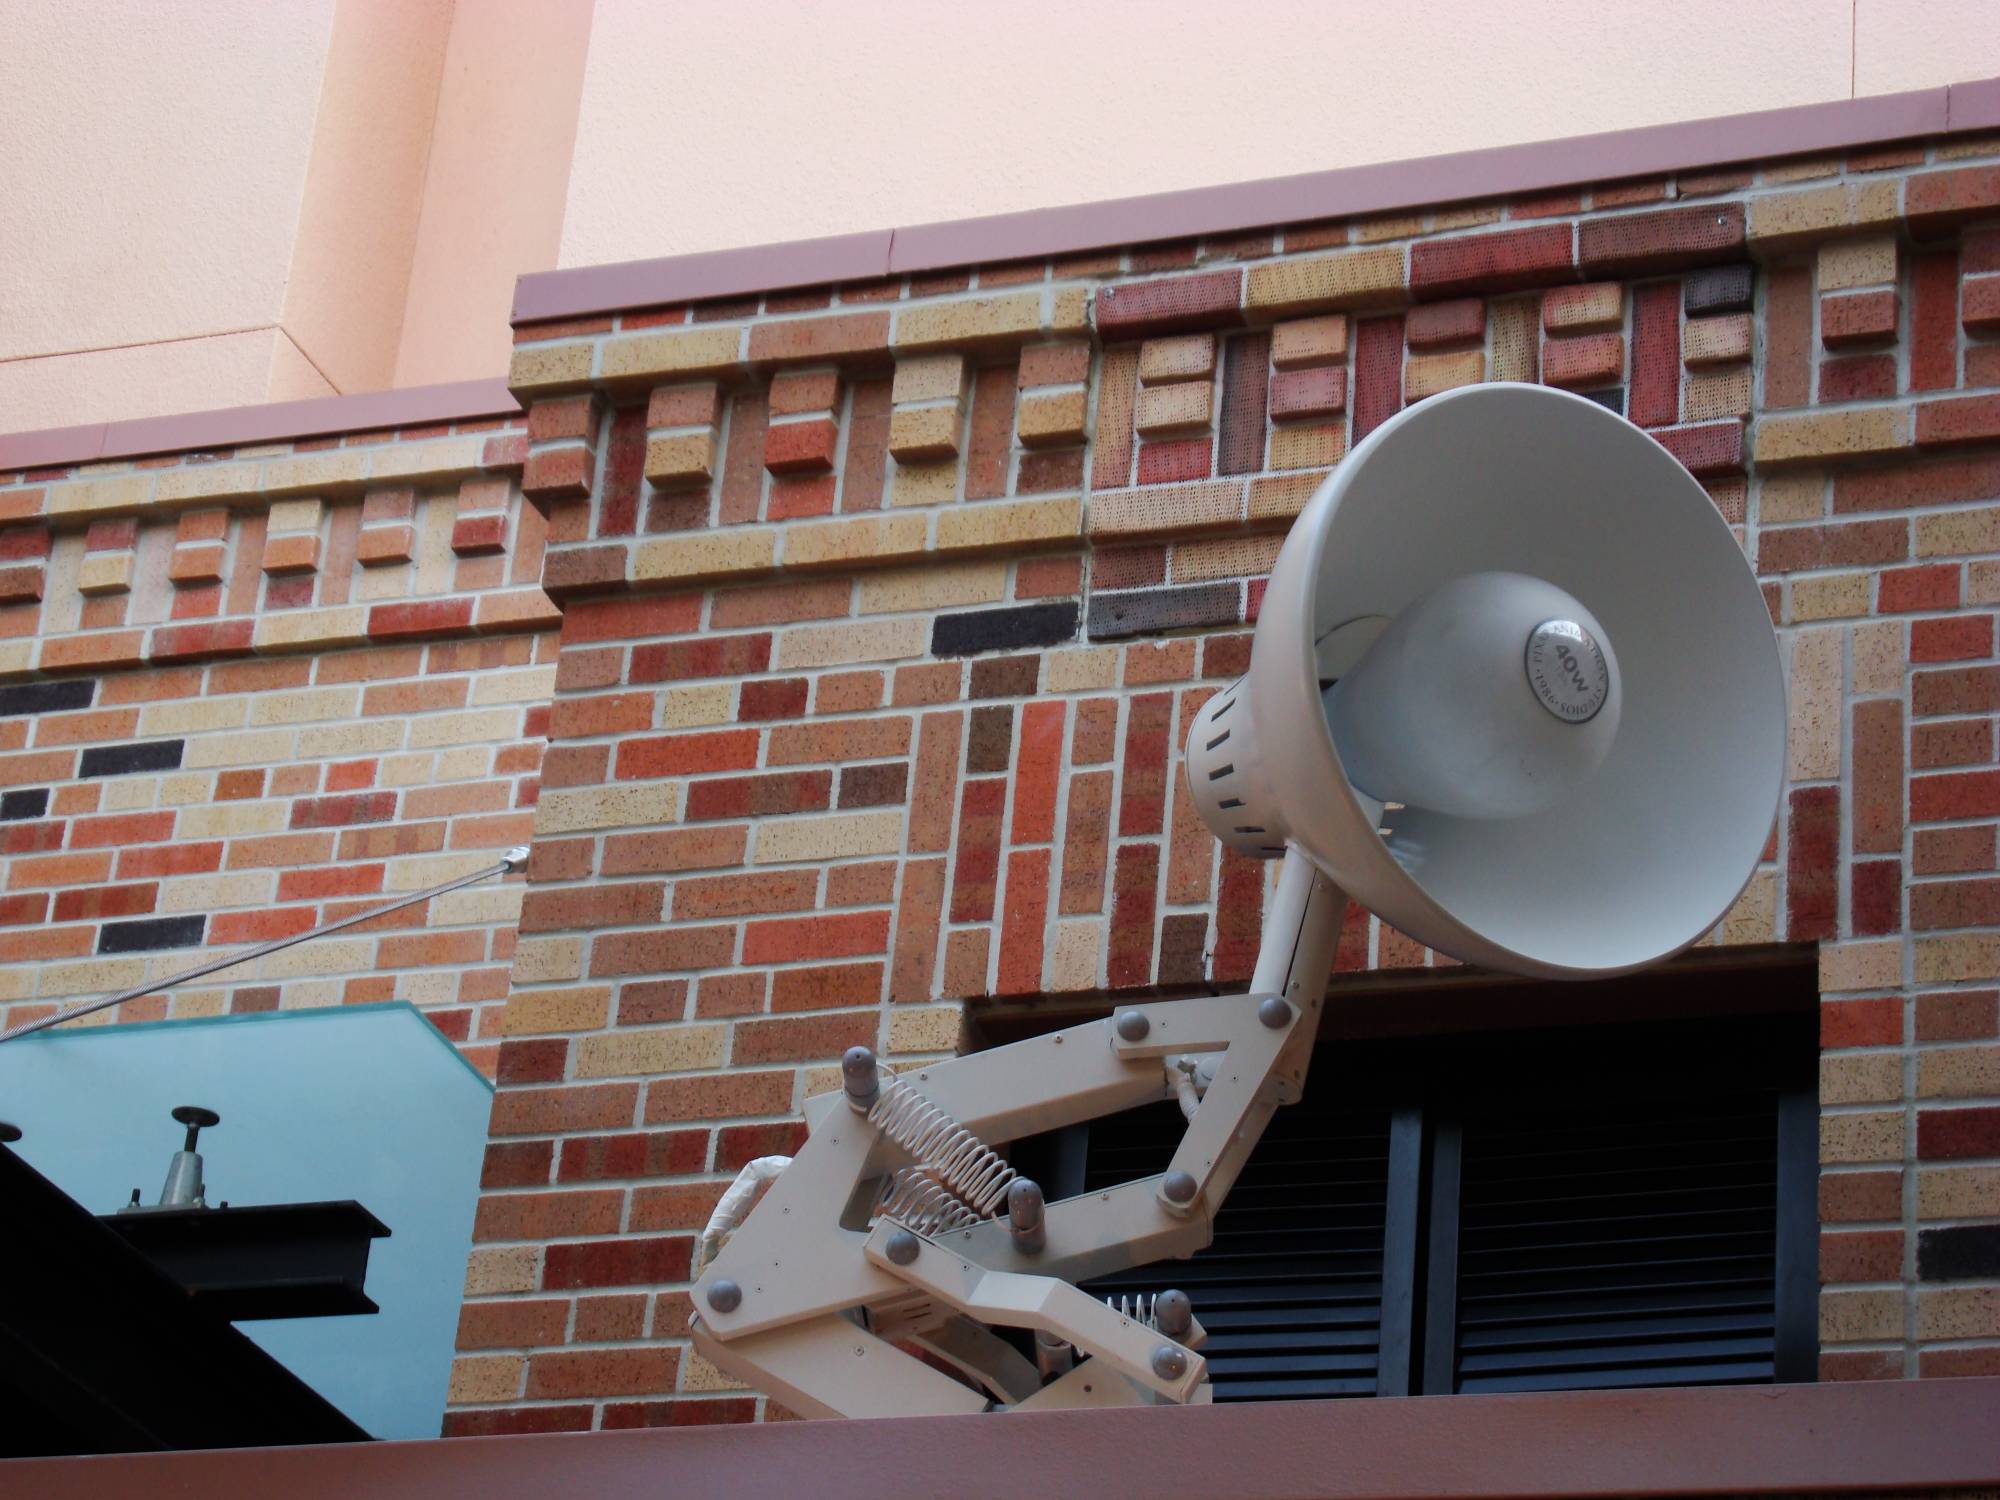 Hollywood Studios - Luxo the Pixar Lamp